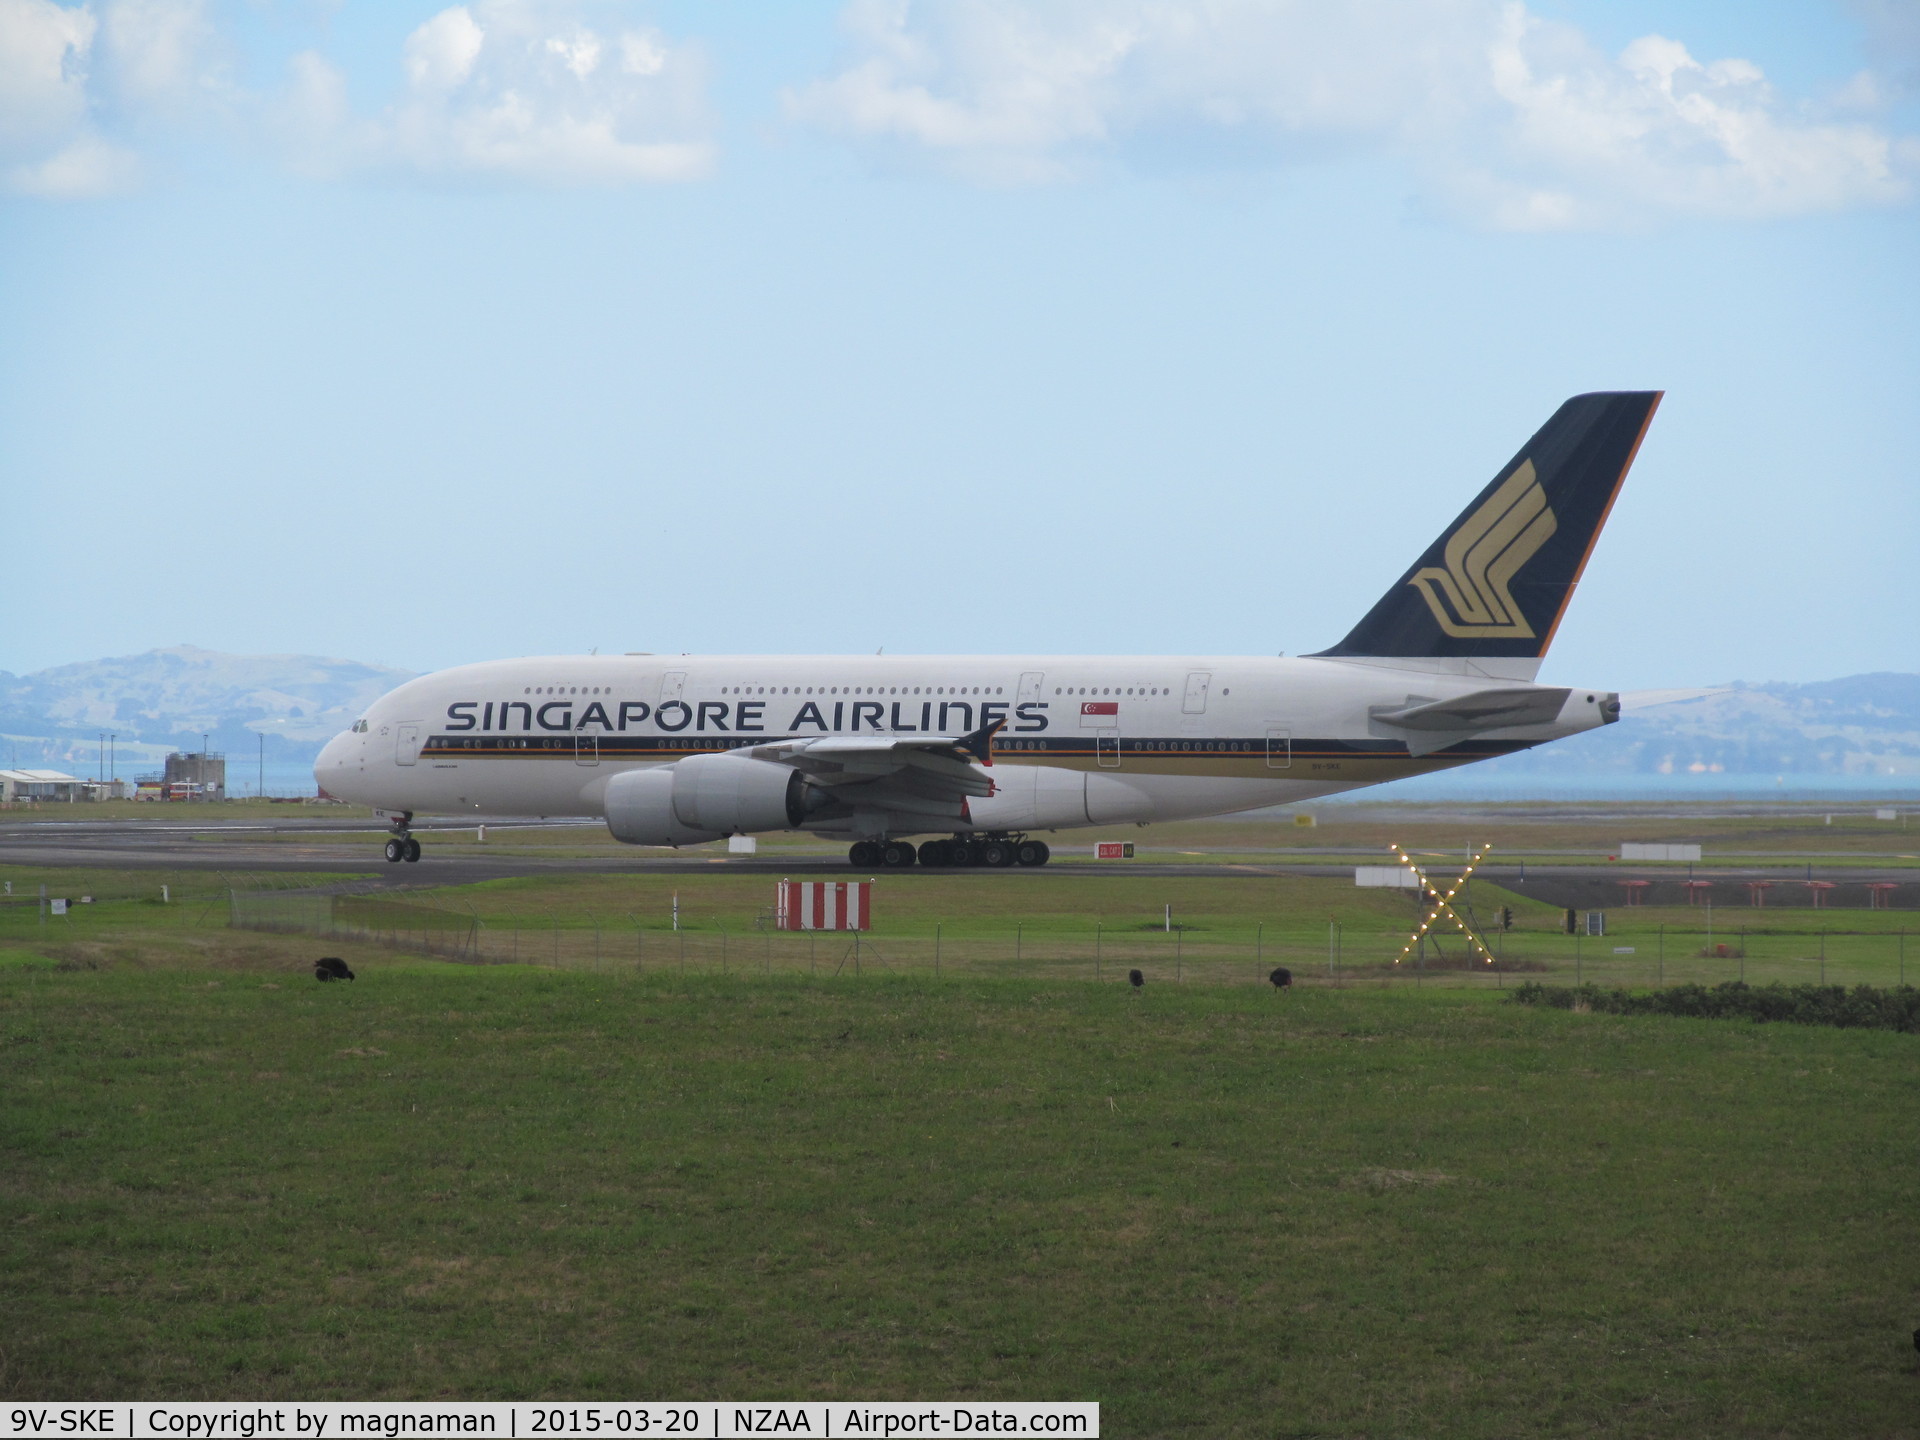 9V-SKE, 2007 Airbus A380-841 C/N 010, turning onto runway